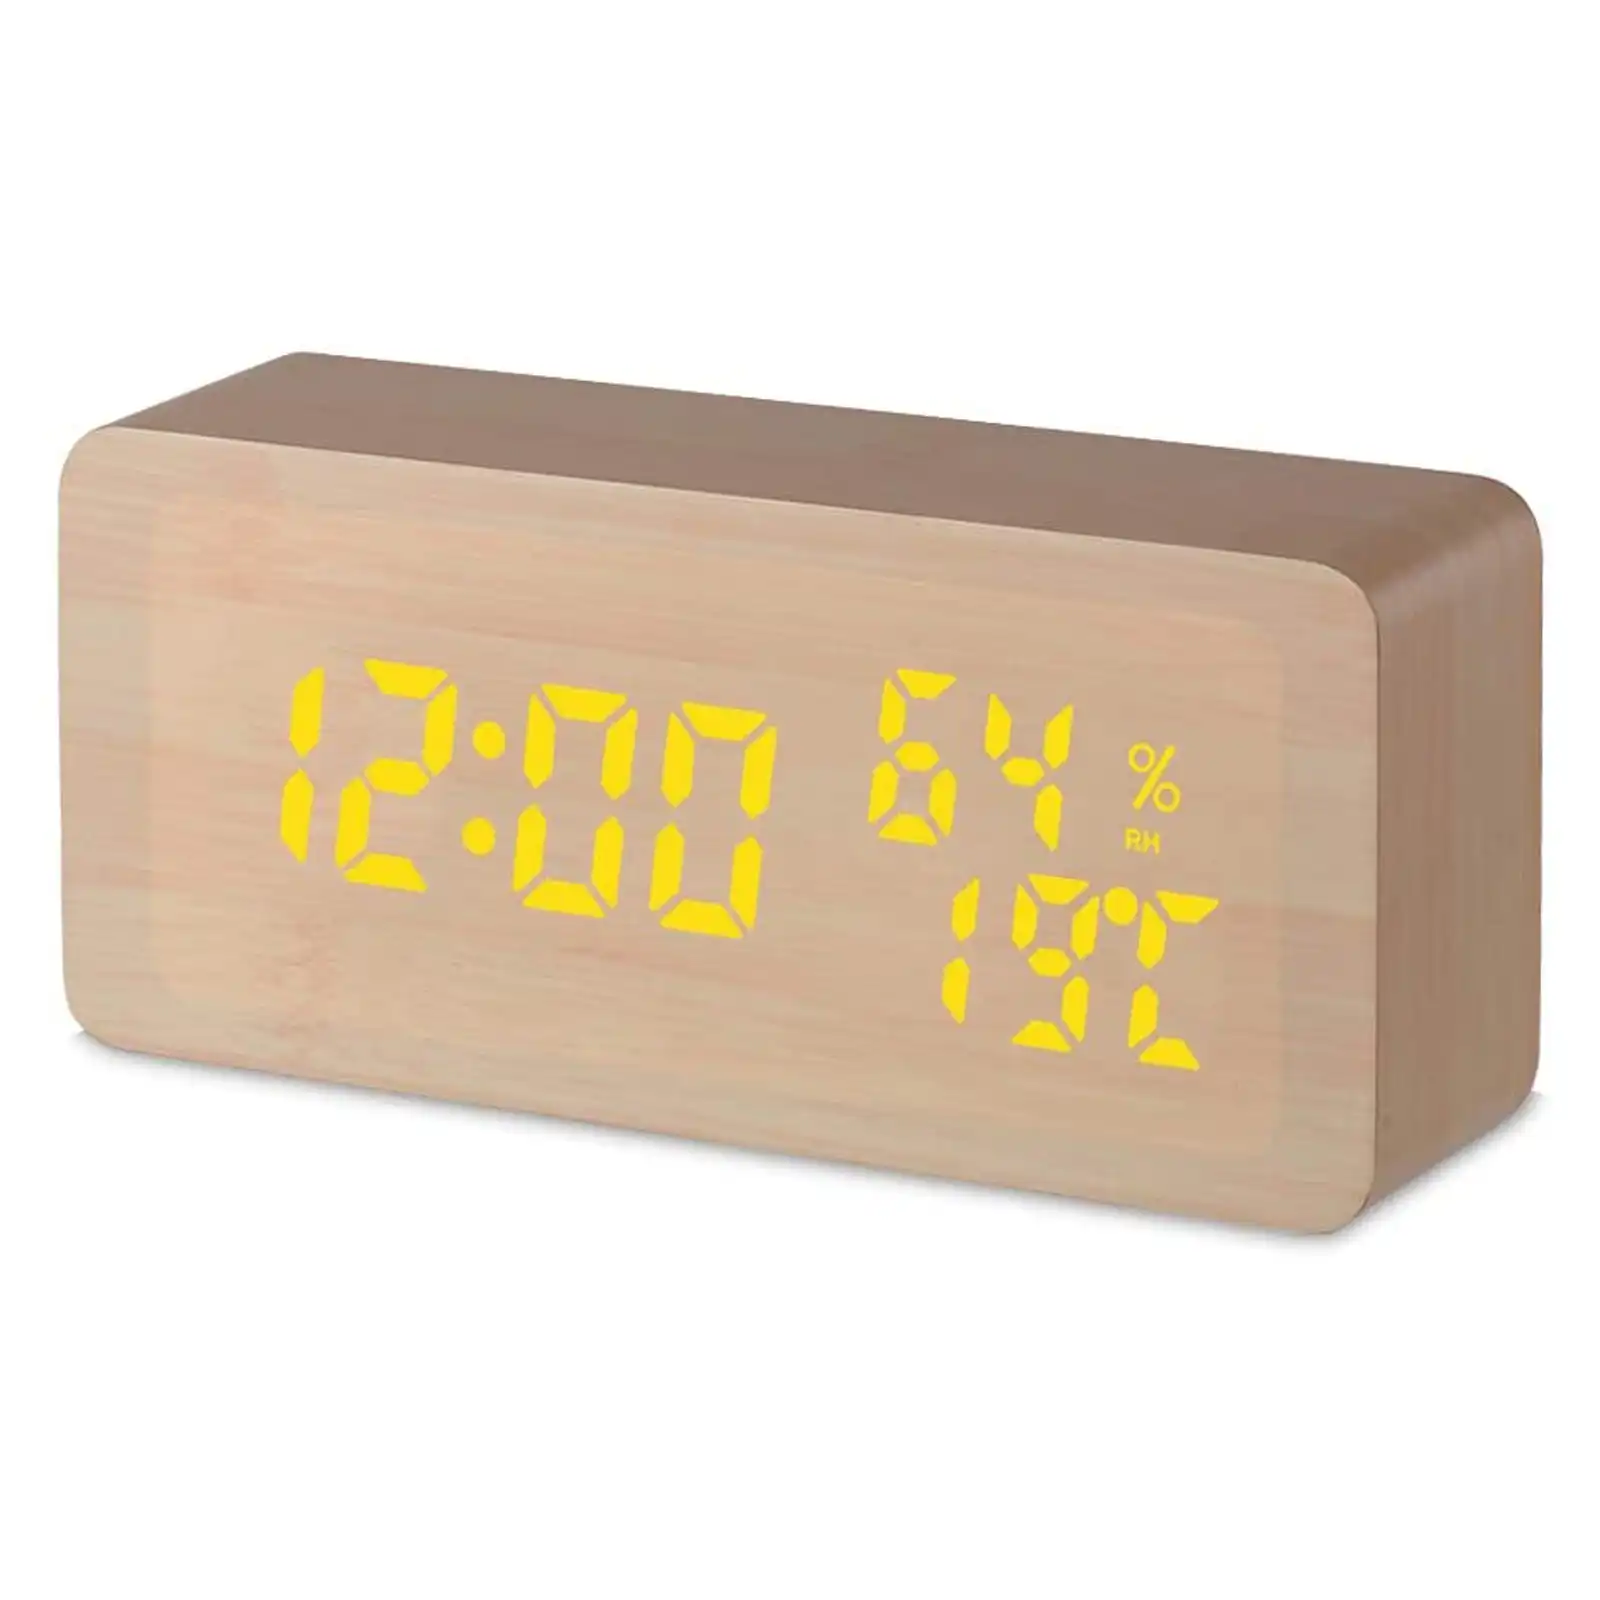 TODO LED Digital Alarm Clock Woodgrain Temperature Humidity USB Power - Beige